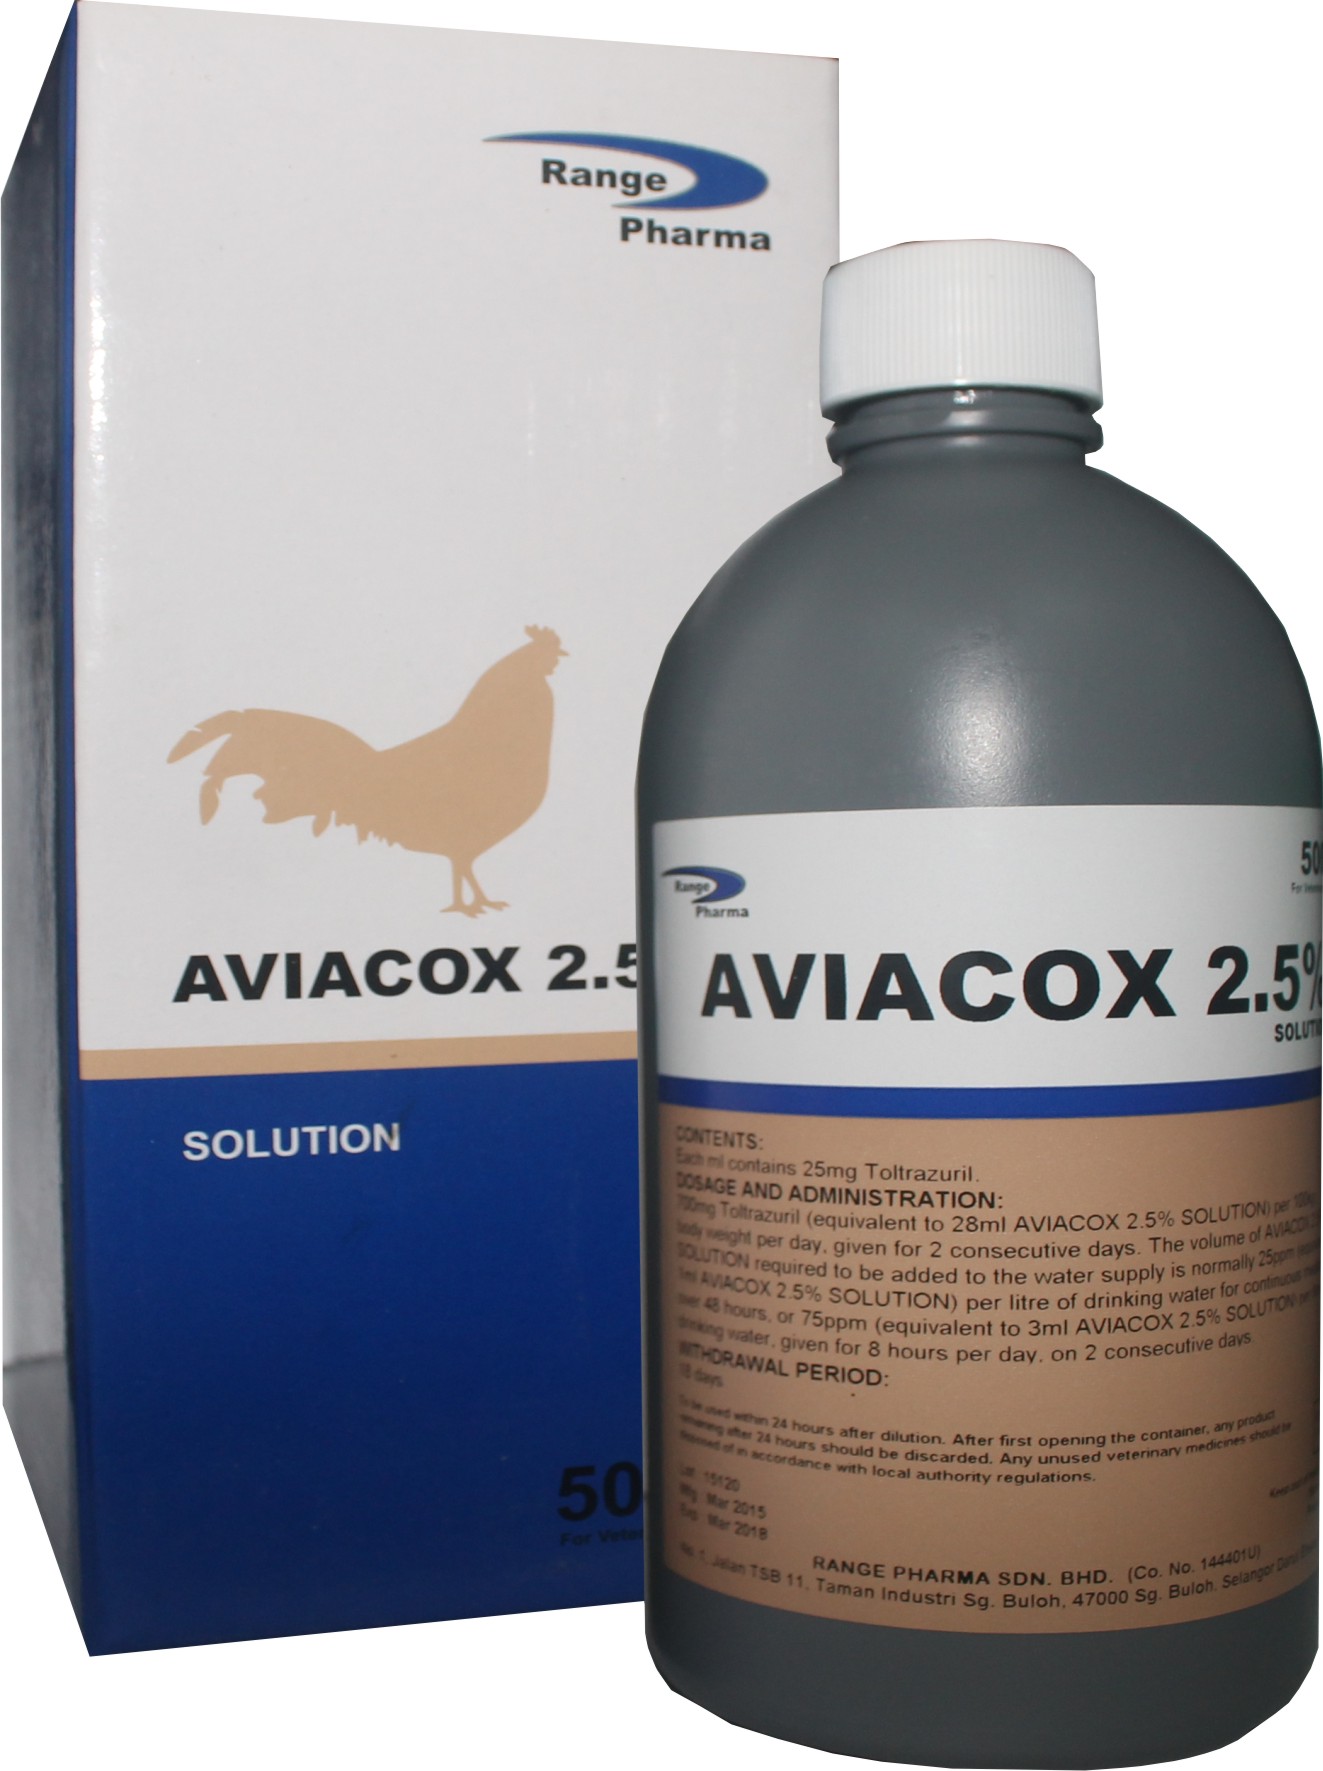 Avicox